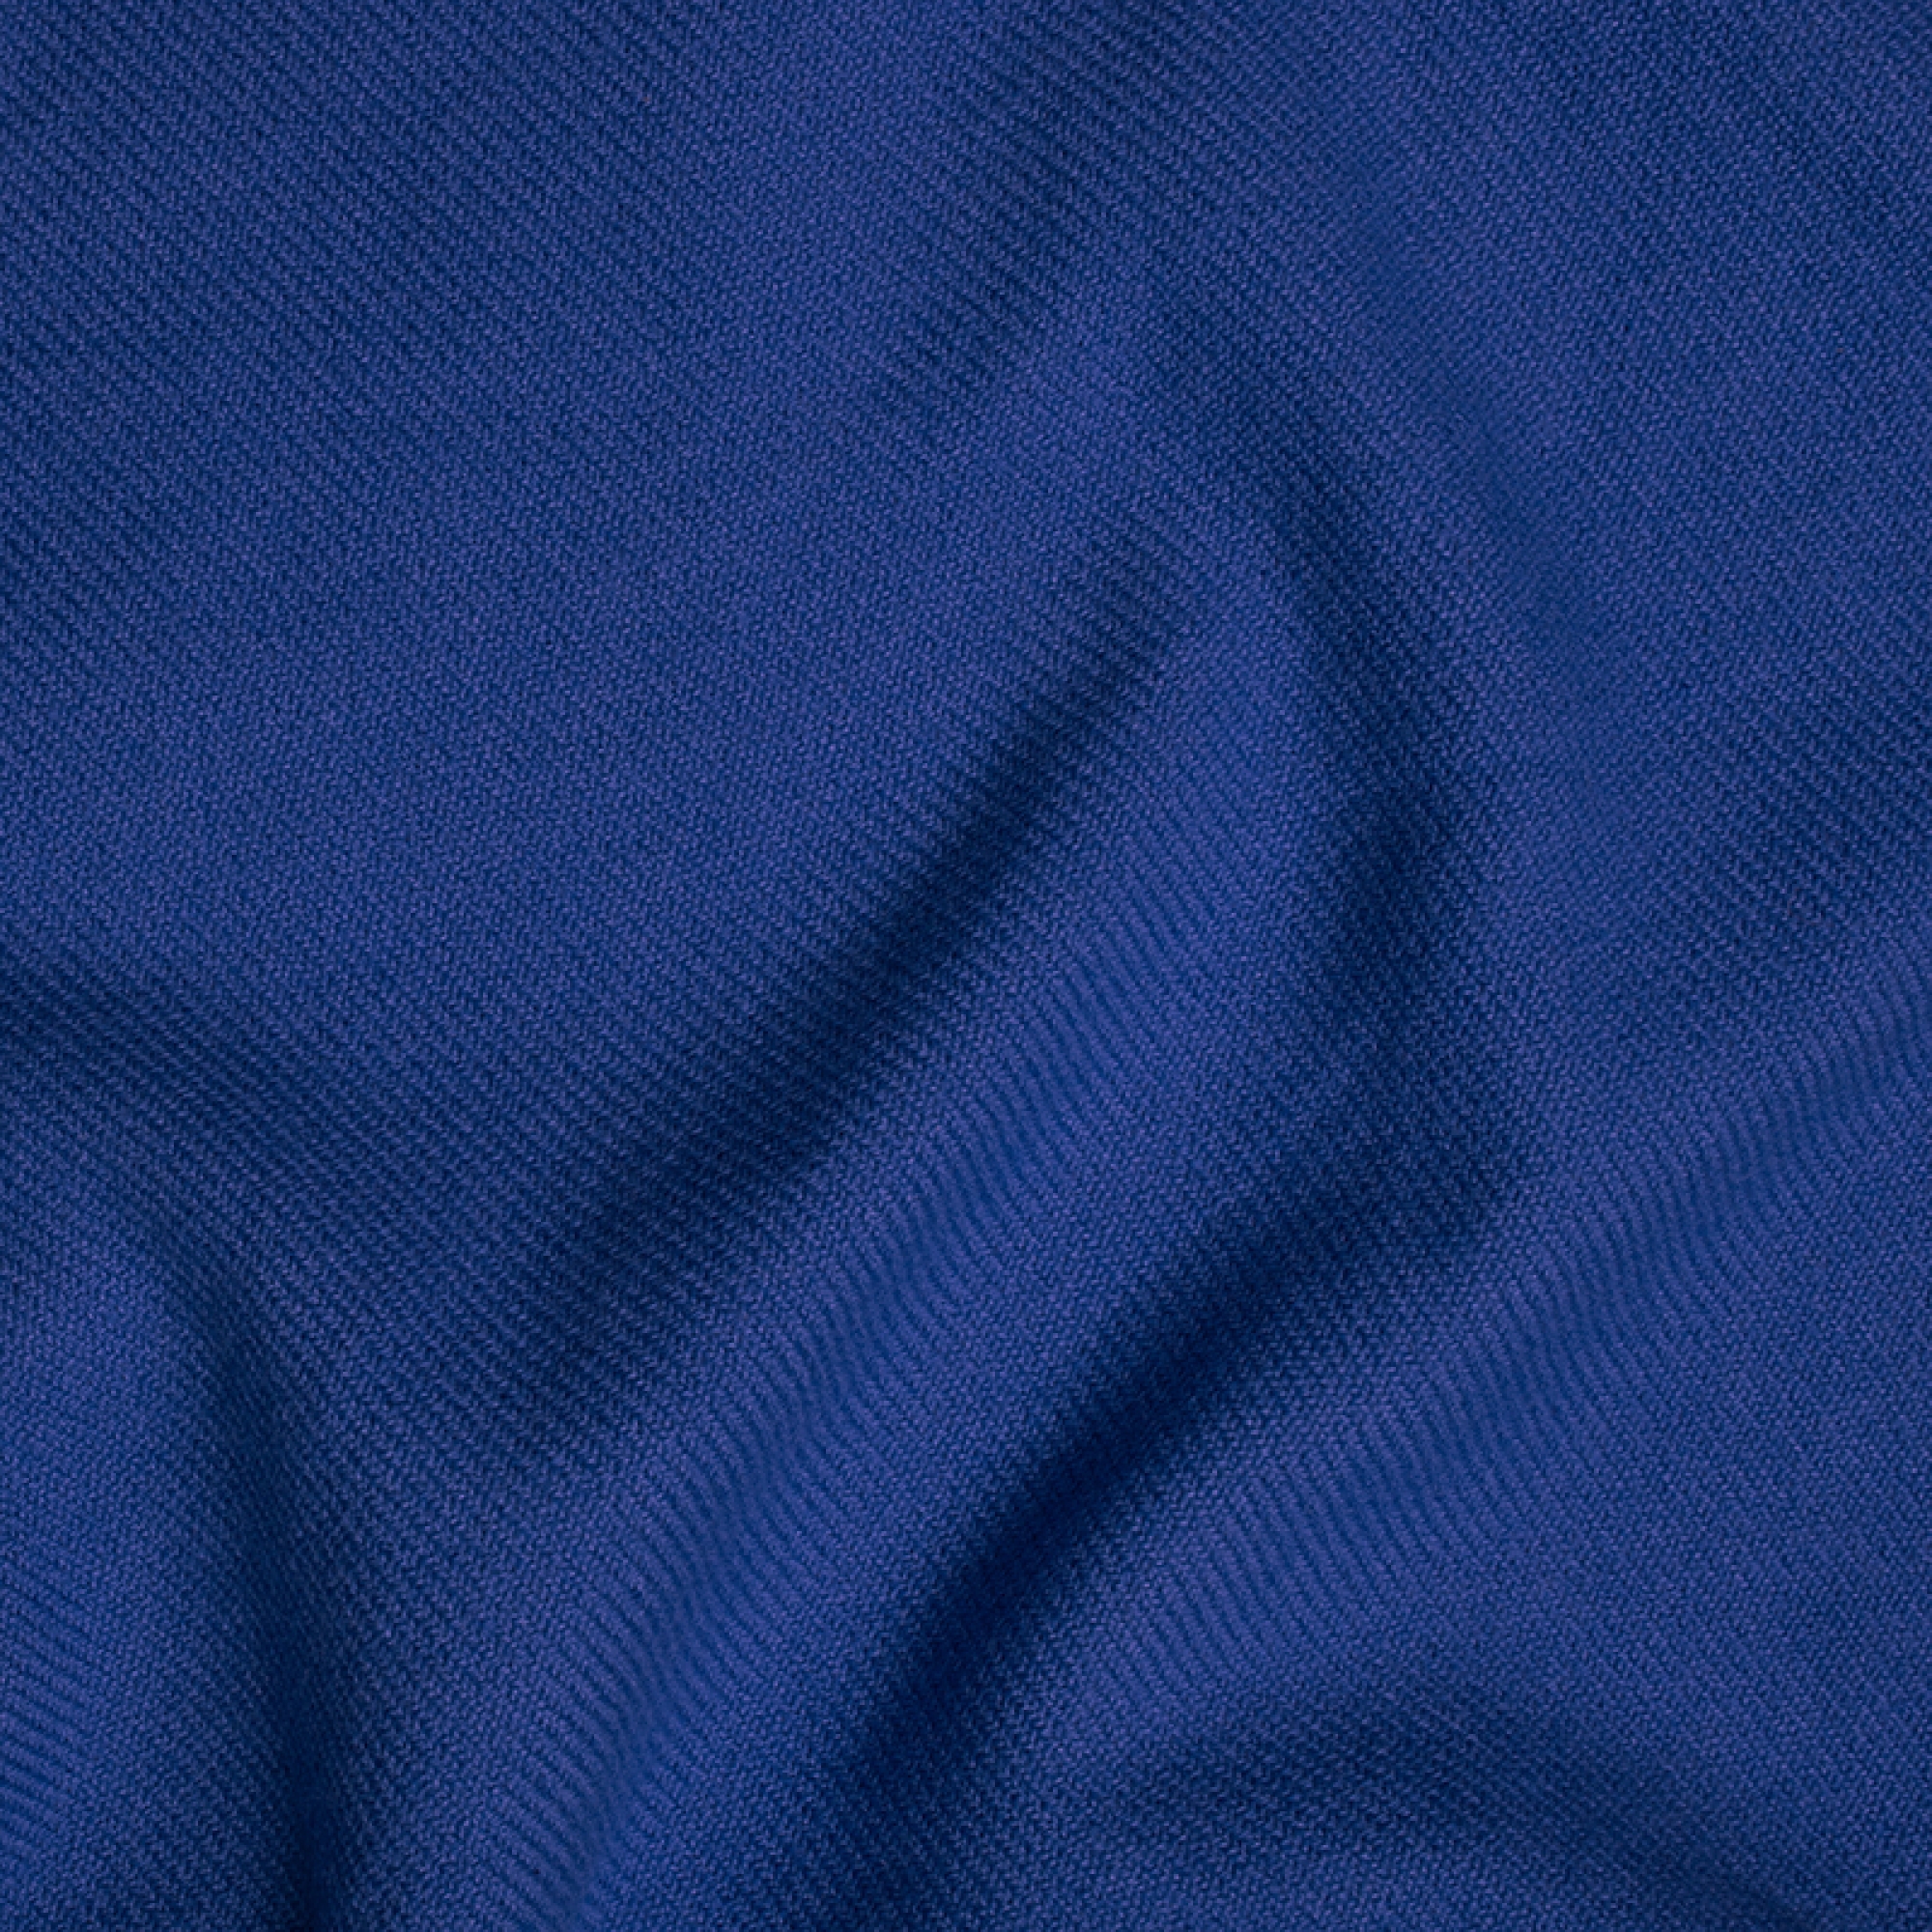 Cachemire pull homme toodoo plain xl 240 x 260 bleuet 240 x 260 cm